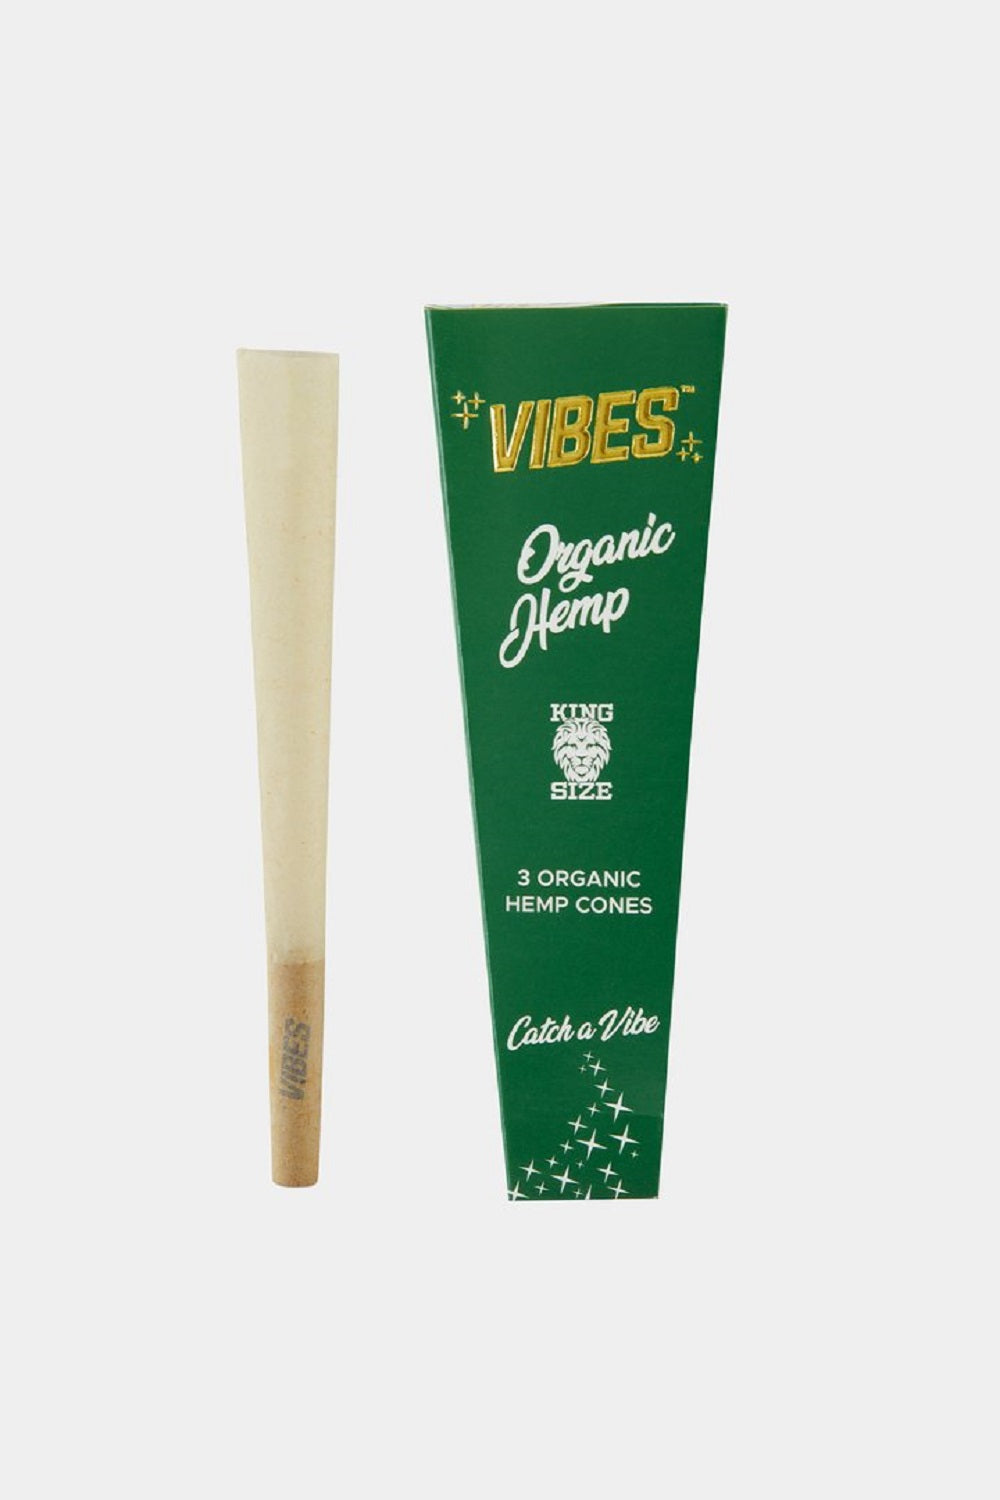 Vibes Organic Hemp King Size Cones 3 Pack